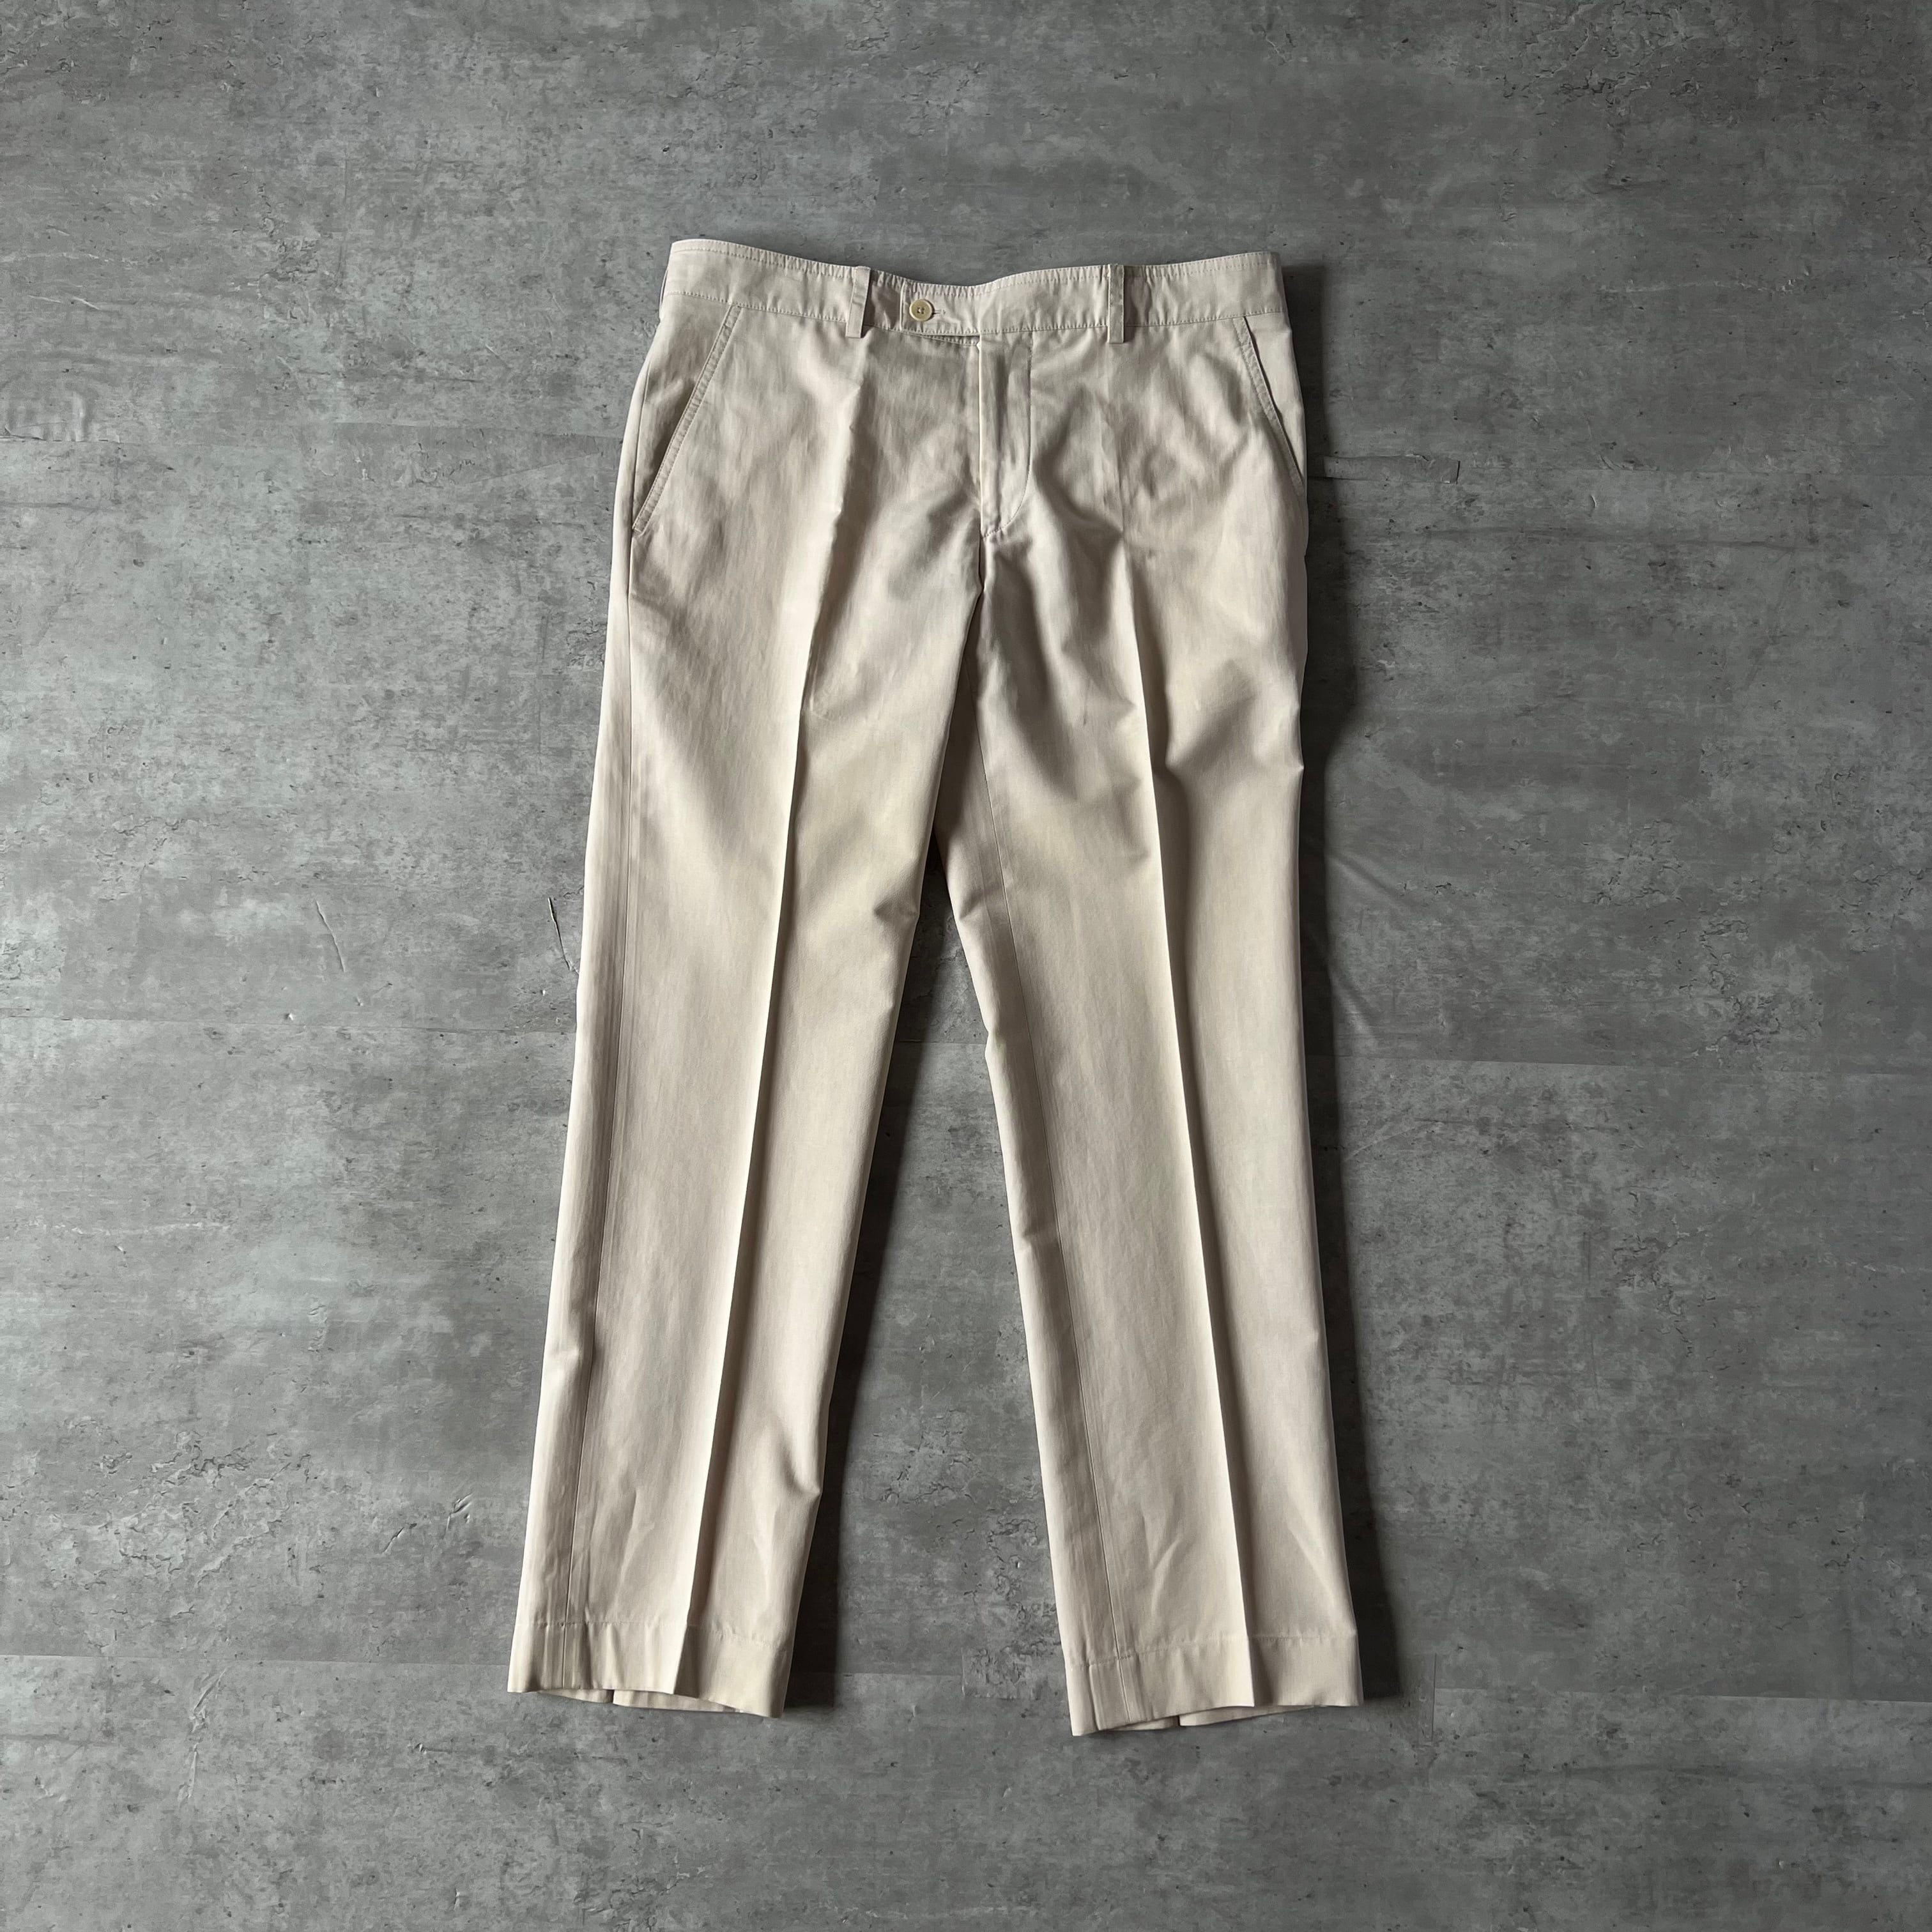 80s “Hermes” W34相当 cotton linen slacks pants made in italy “エルメス”  コットンリネンスラックスパンツ イタリア製